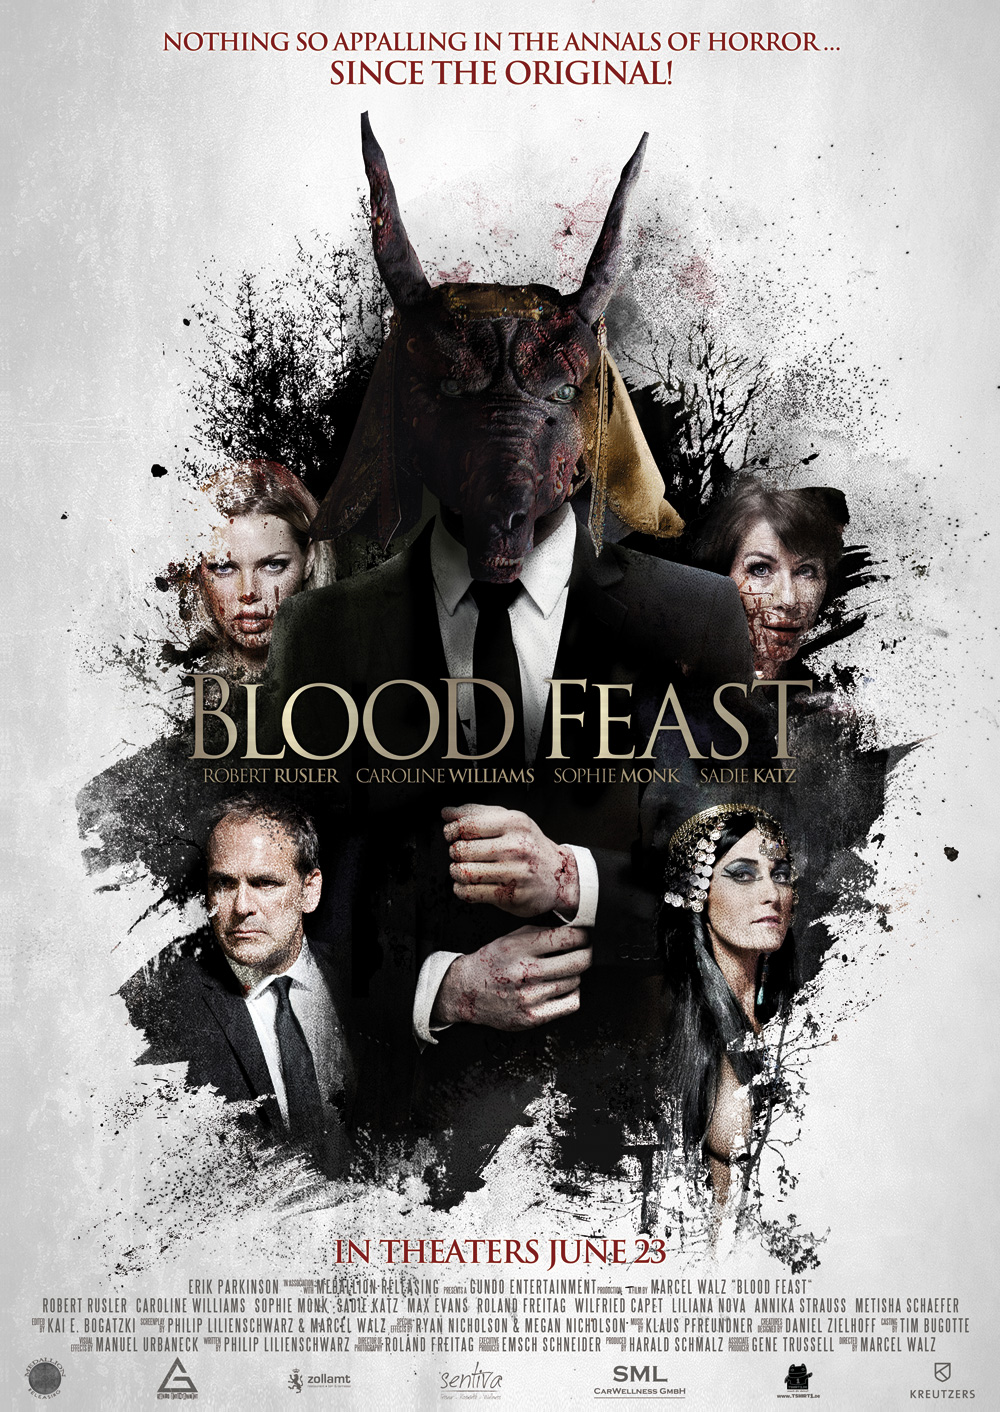 Nonton film Blood Feast layarkaca21 indoxx1 ganool online streaming terbaru